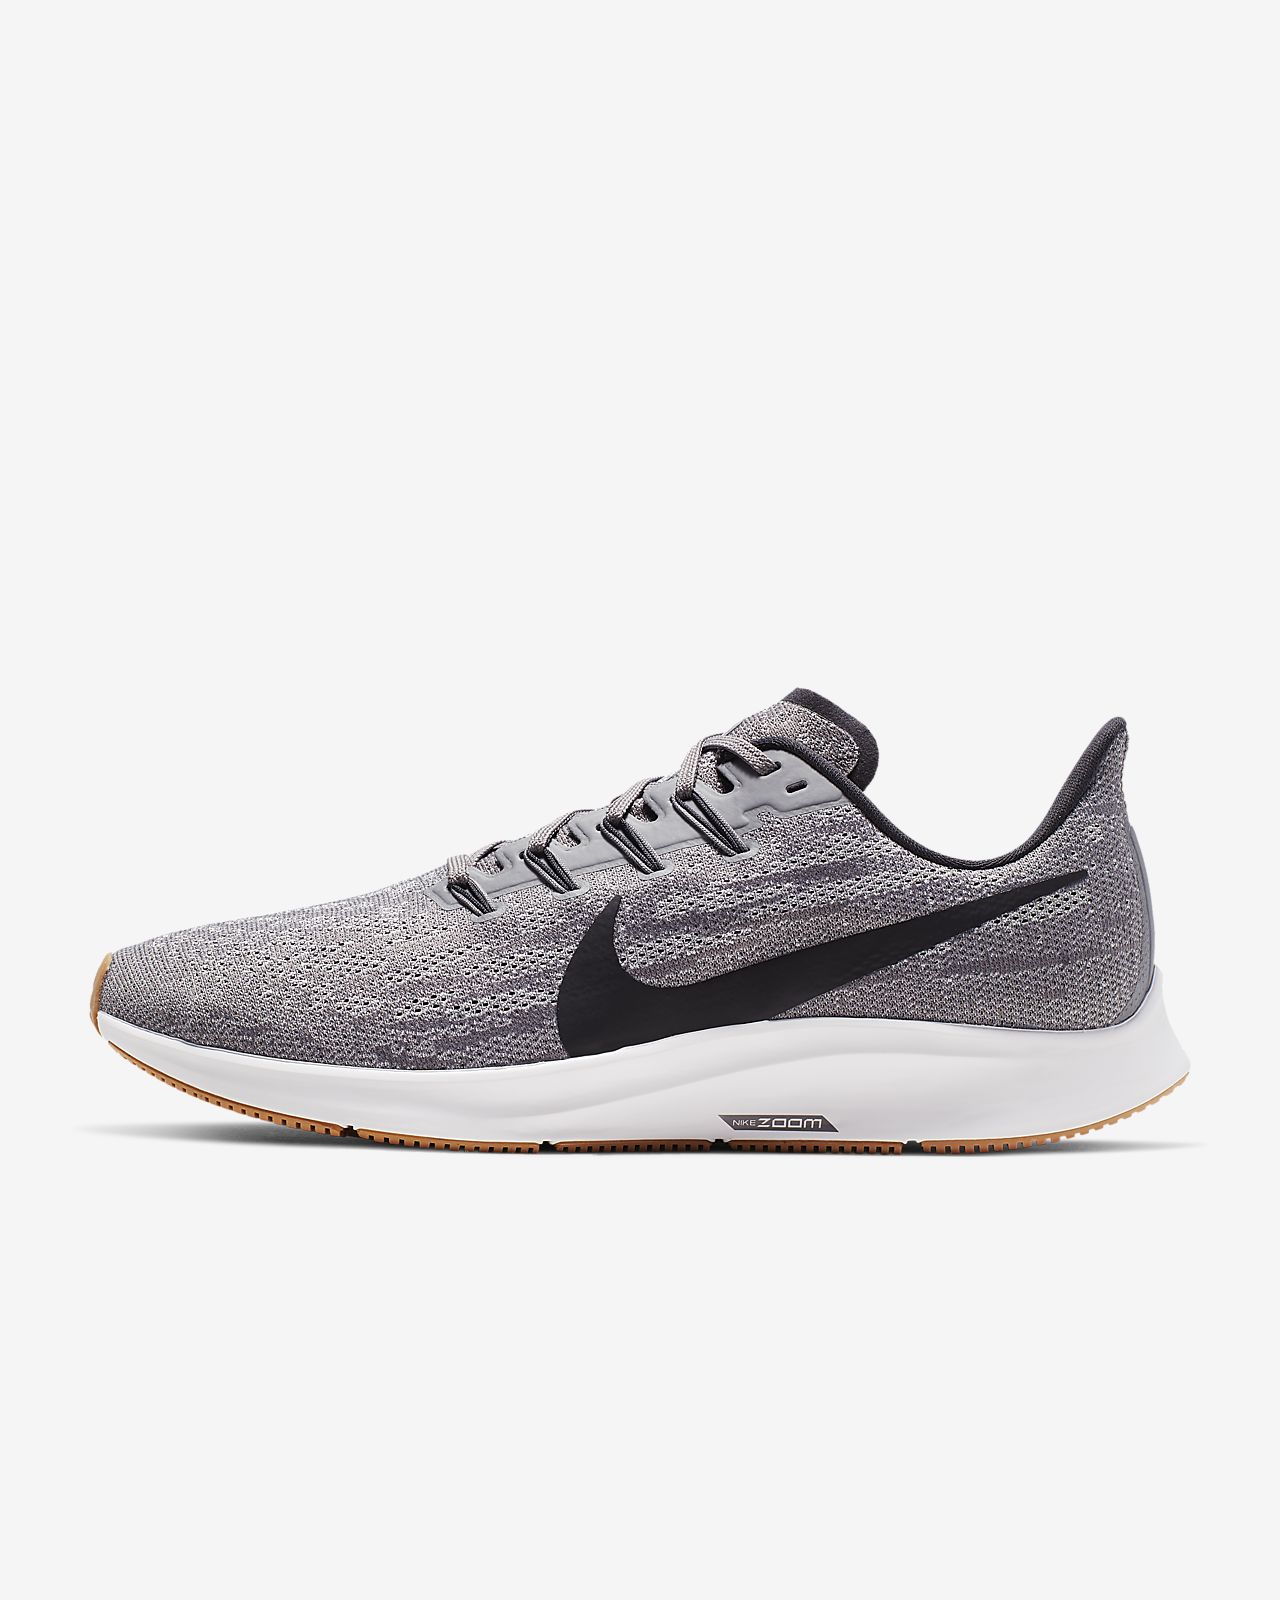 nike running shoes grey